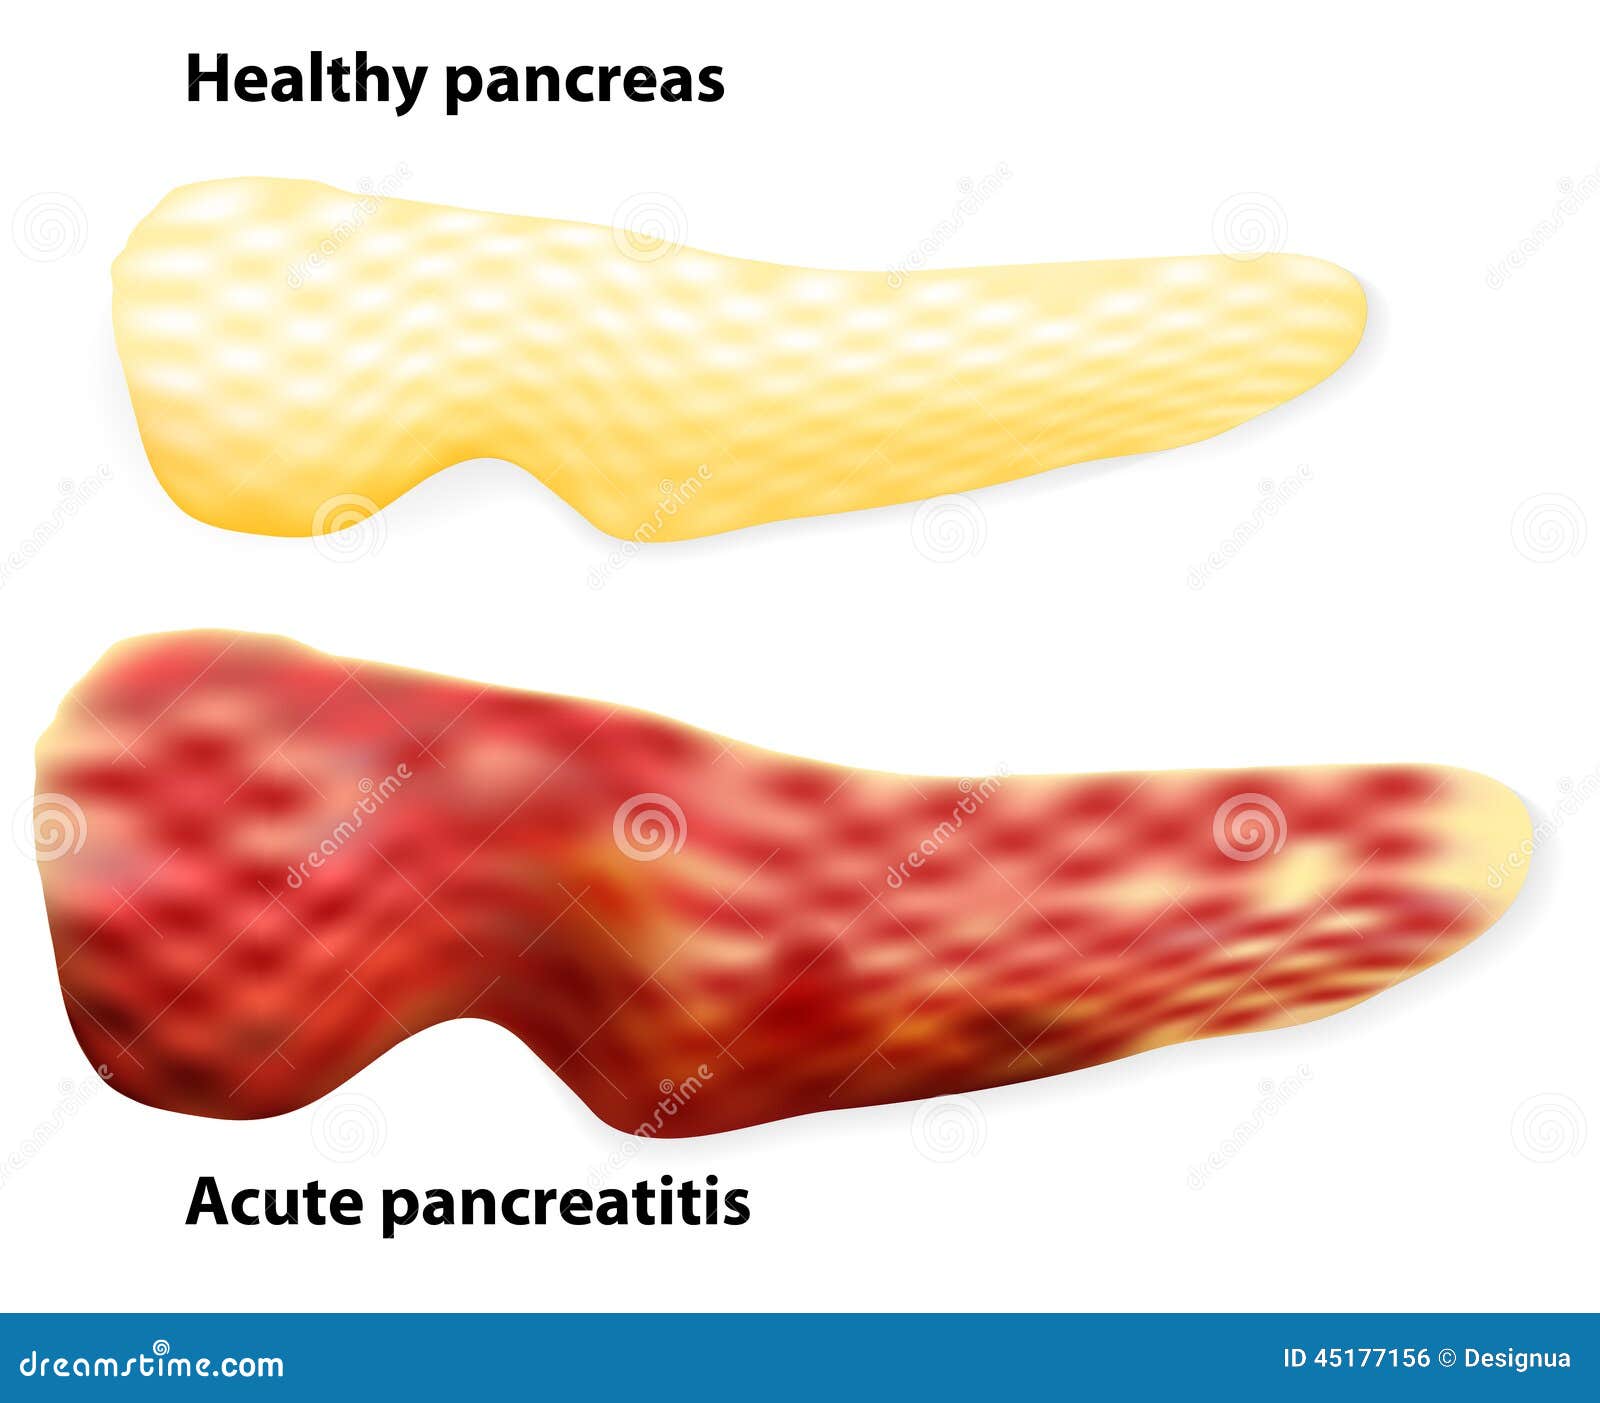 How to keep pancreas healthy naturally